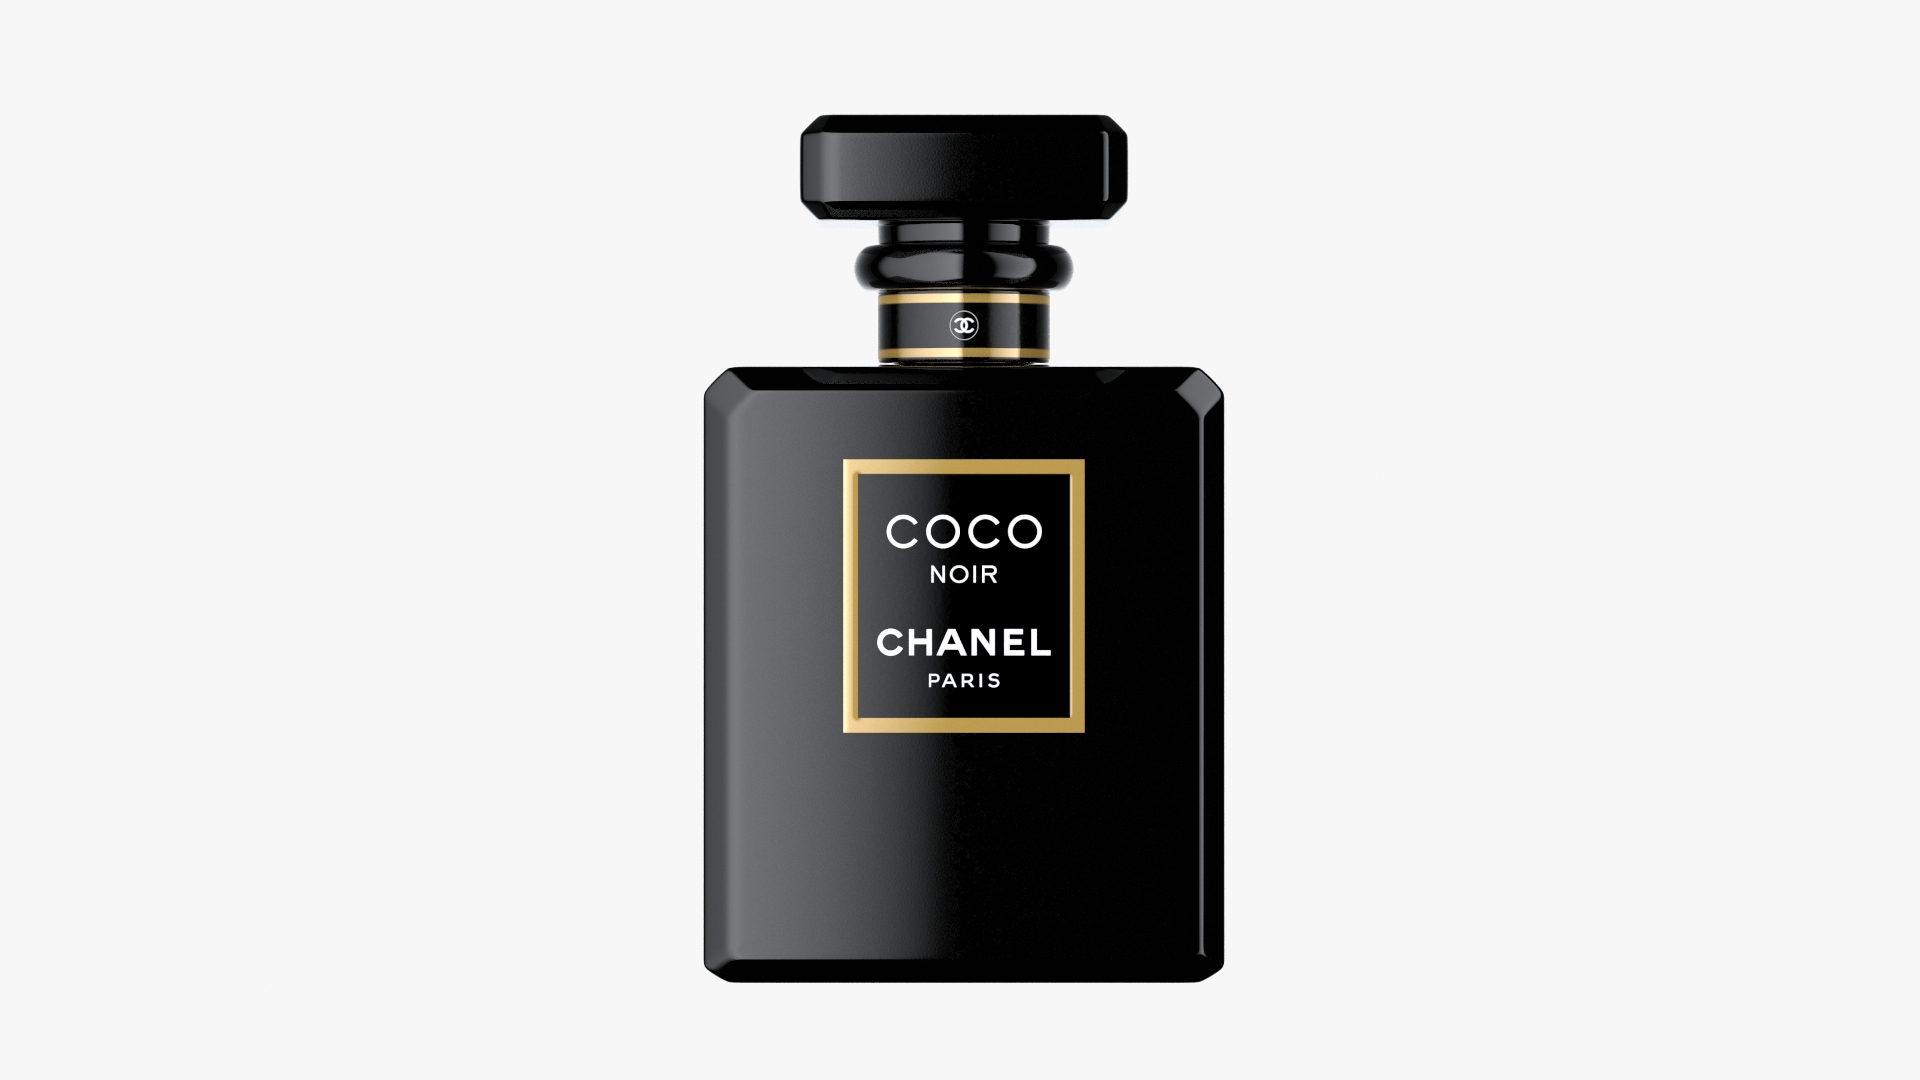 Chanel Coco Noir Perfume Bottle model - TurboSquid 1876891